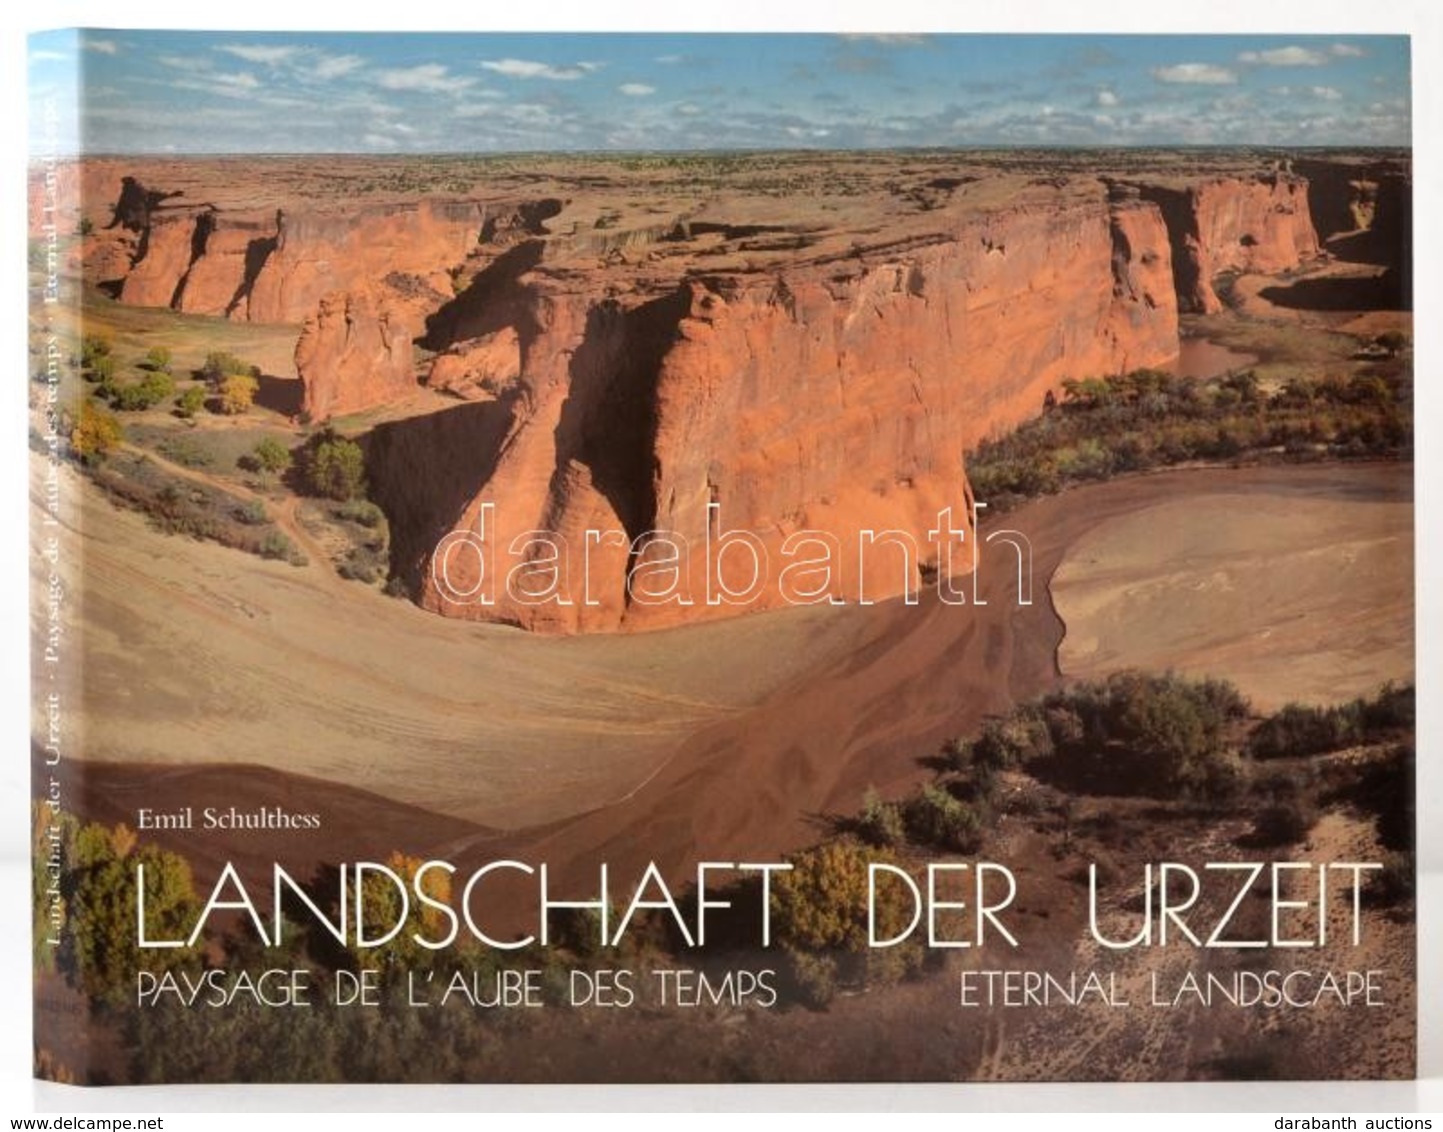 Emil Schulthess-Sigmund Widmer: Landschaft Der Urzeit. Paysage De L'Aube Des Temps. Eternal Landscape. Zürich, 1989, Art - Non Classés